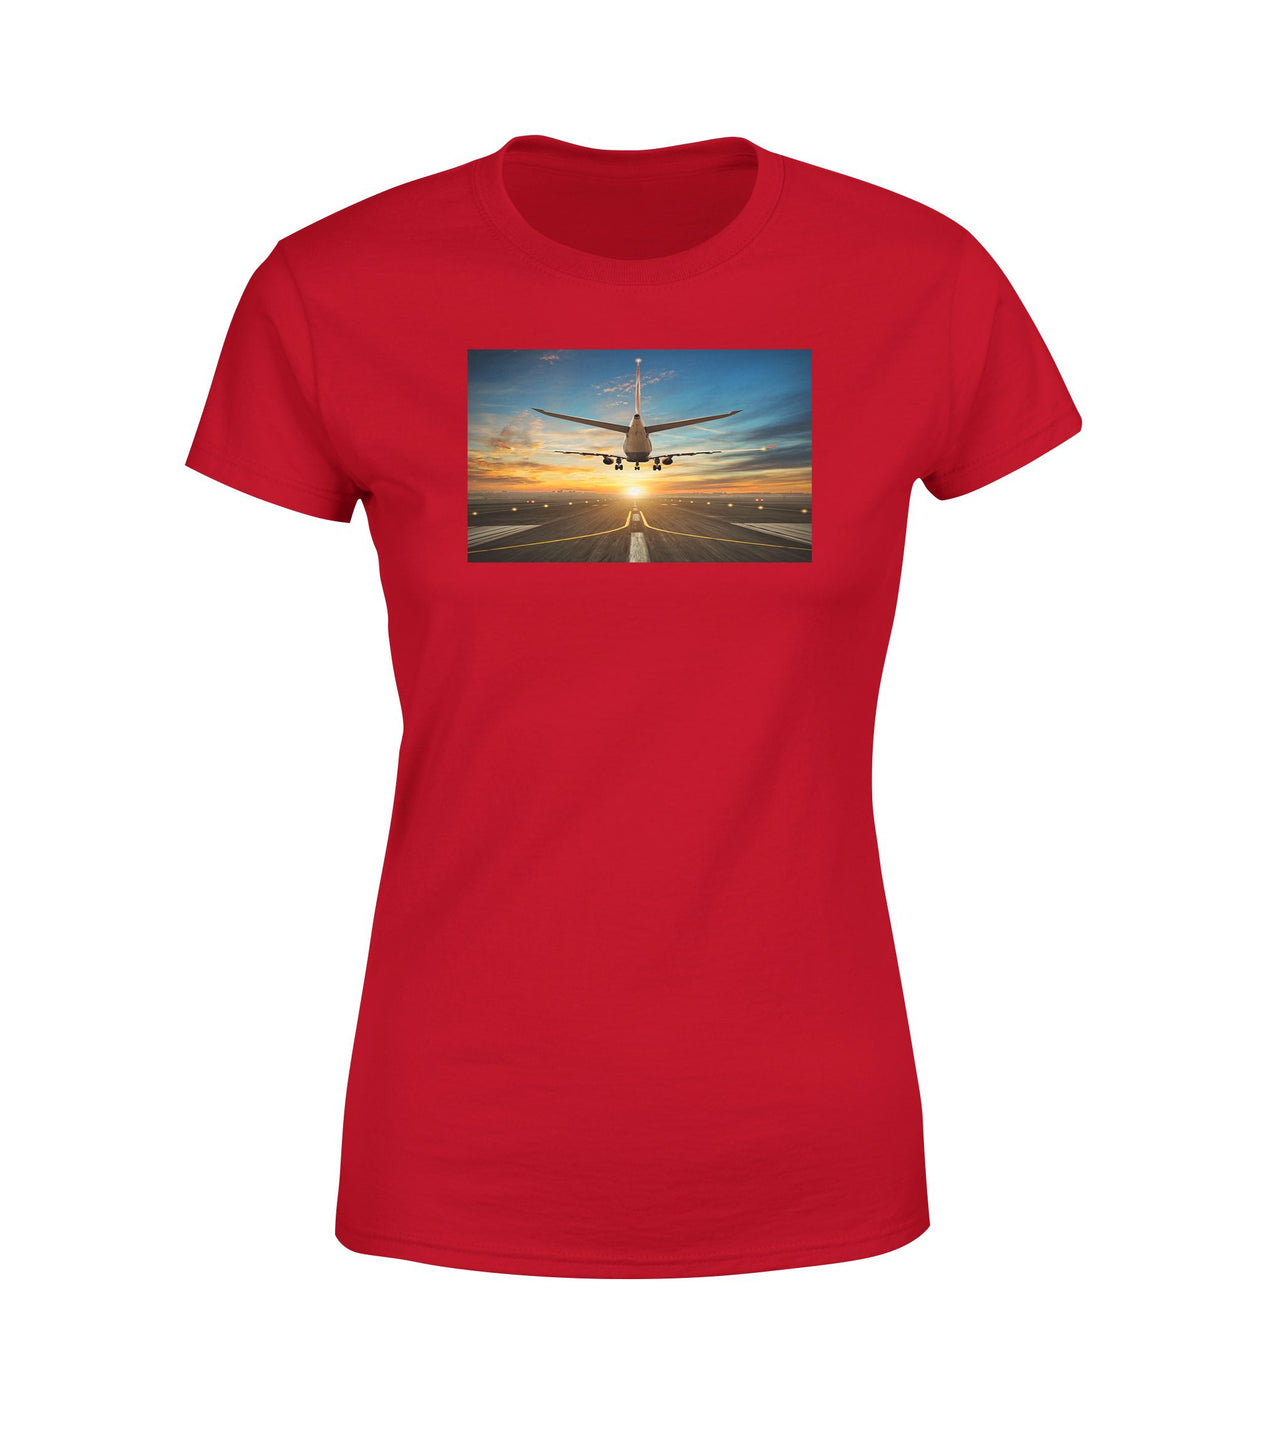 Airplane over Runway Towards the Sunrise Designed Women T-Shirts